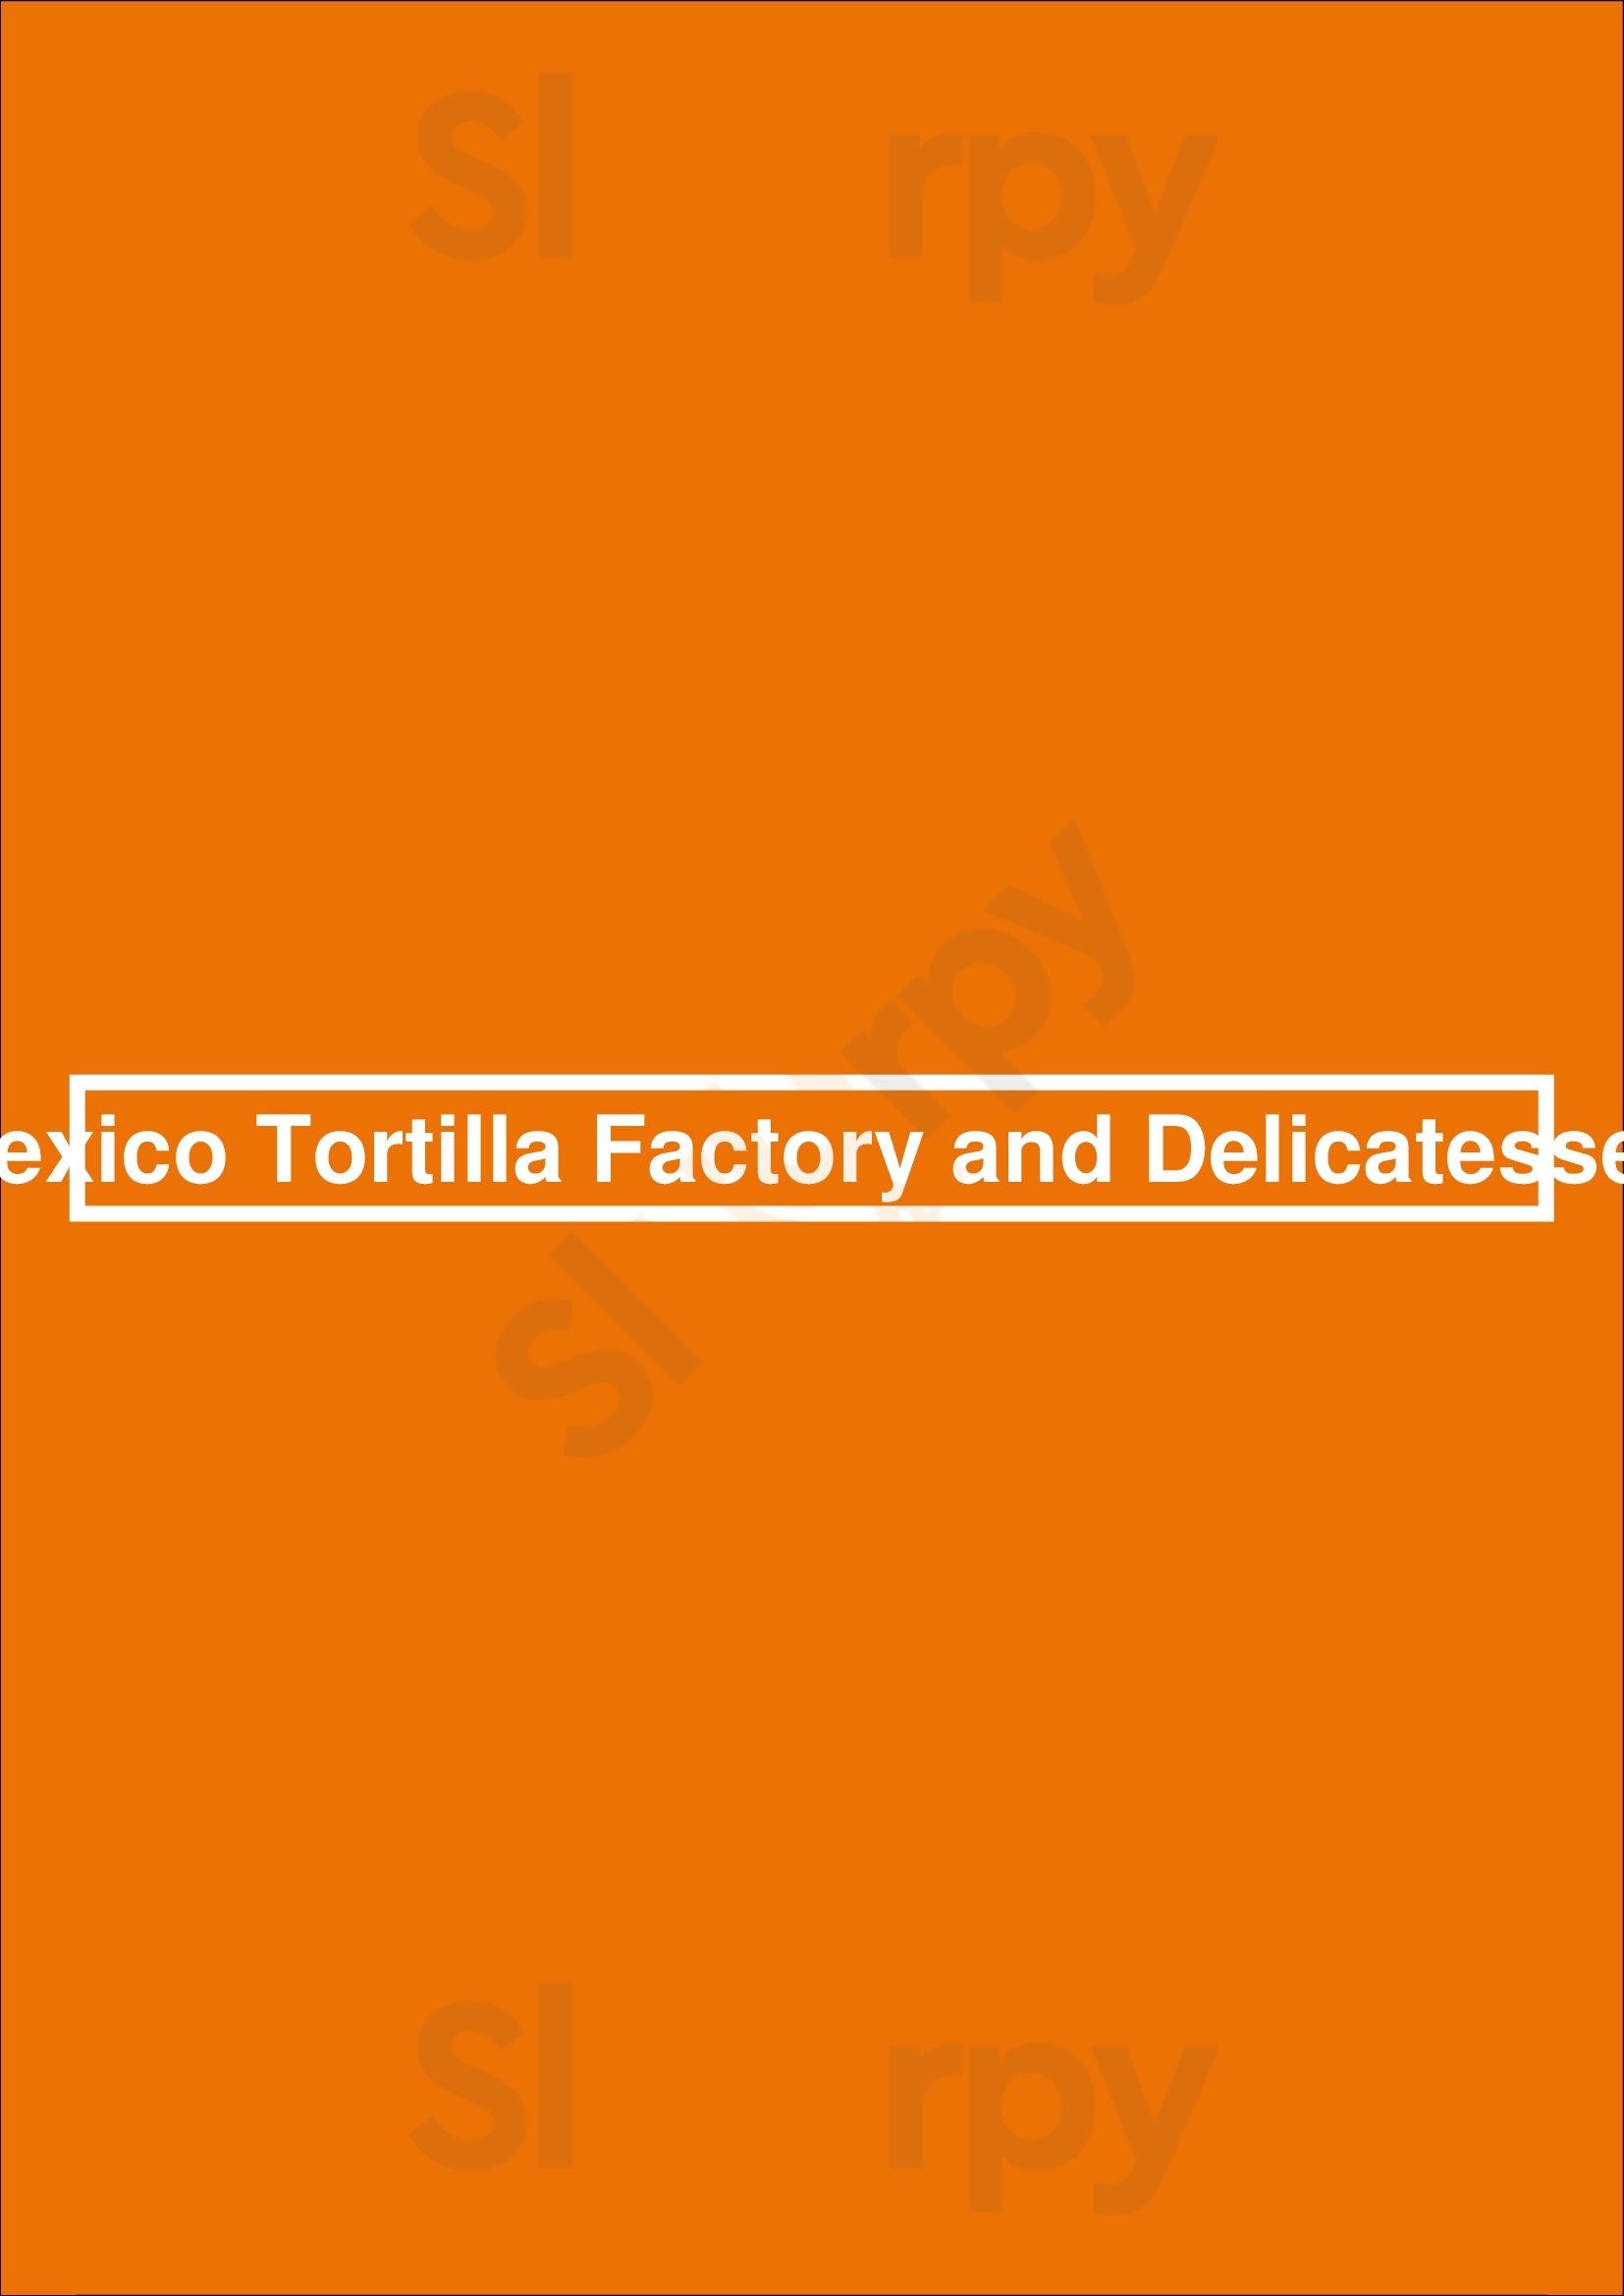 Mexico Tortilla Factory And Delicatessen Newark Menu - 1